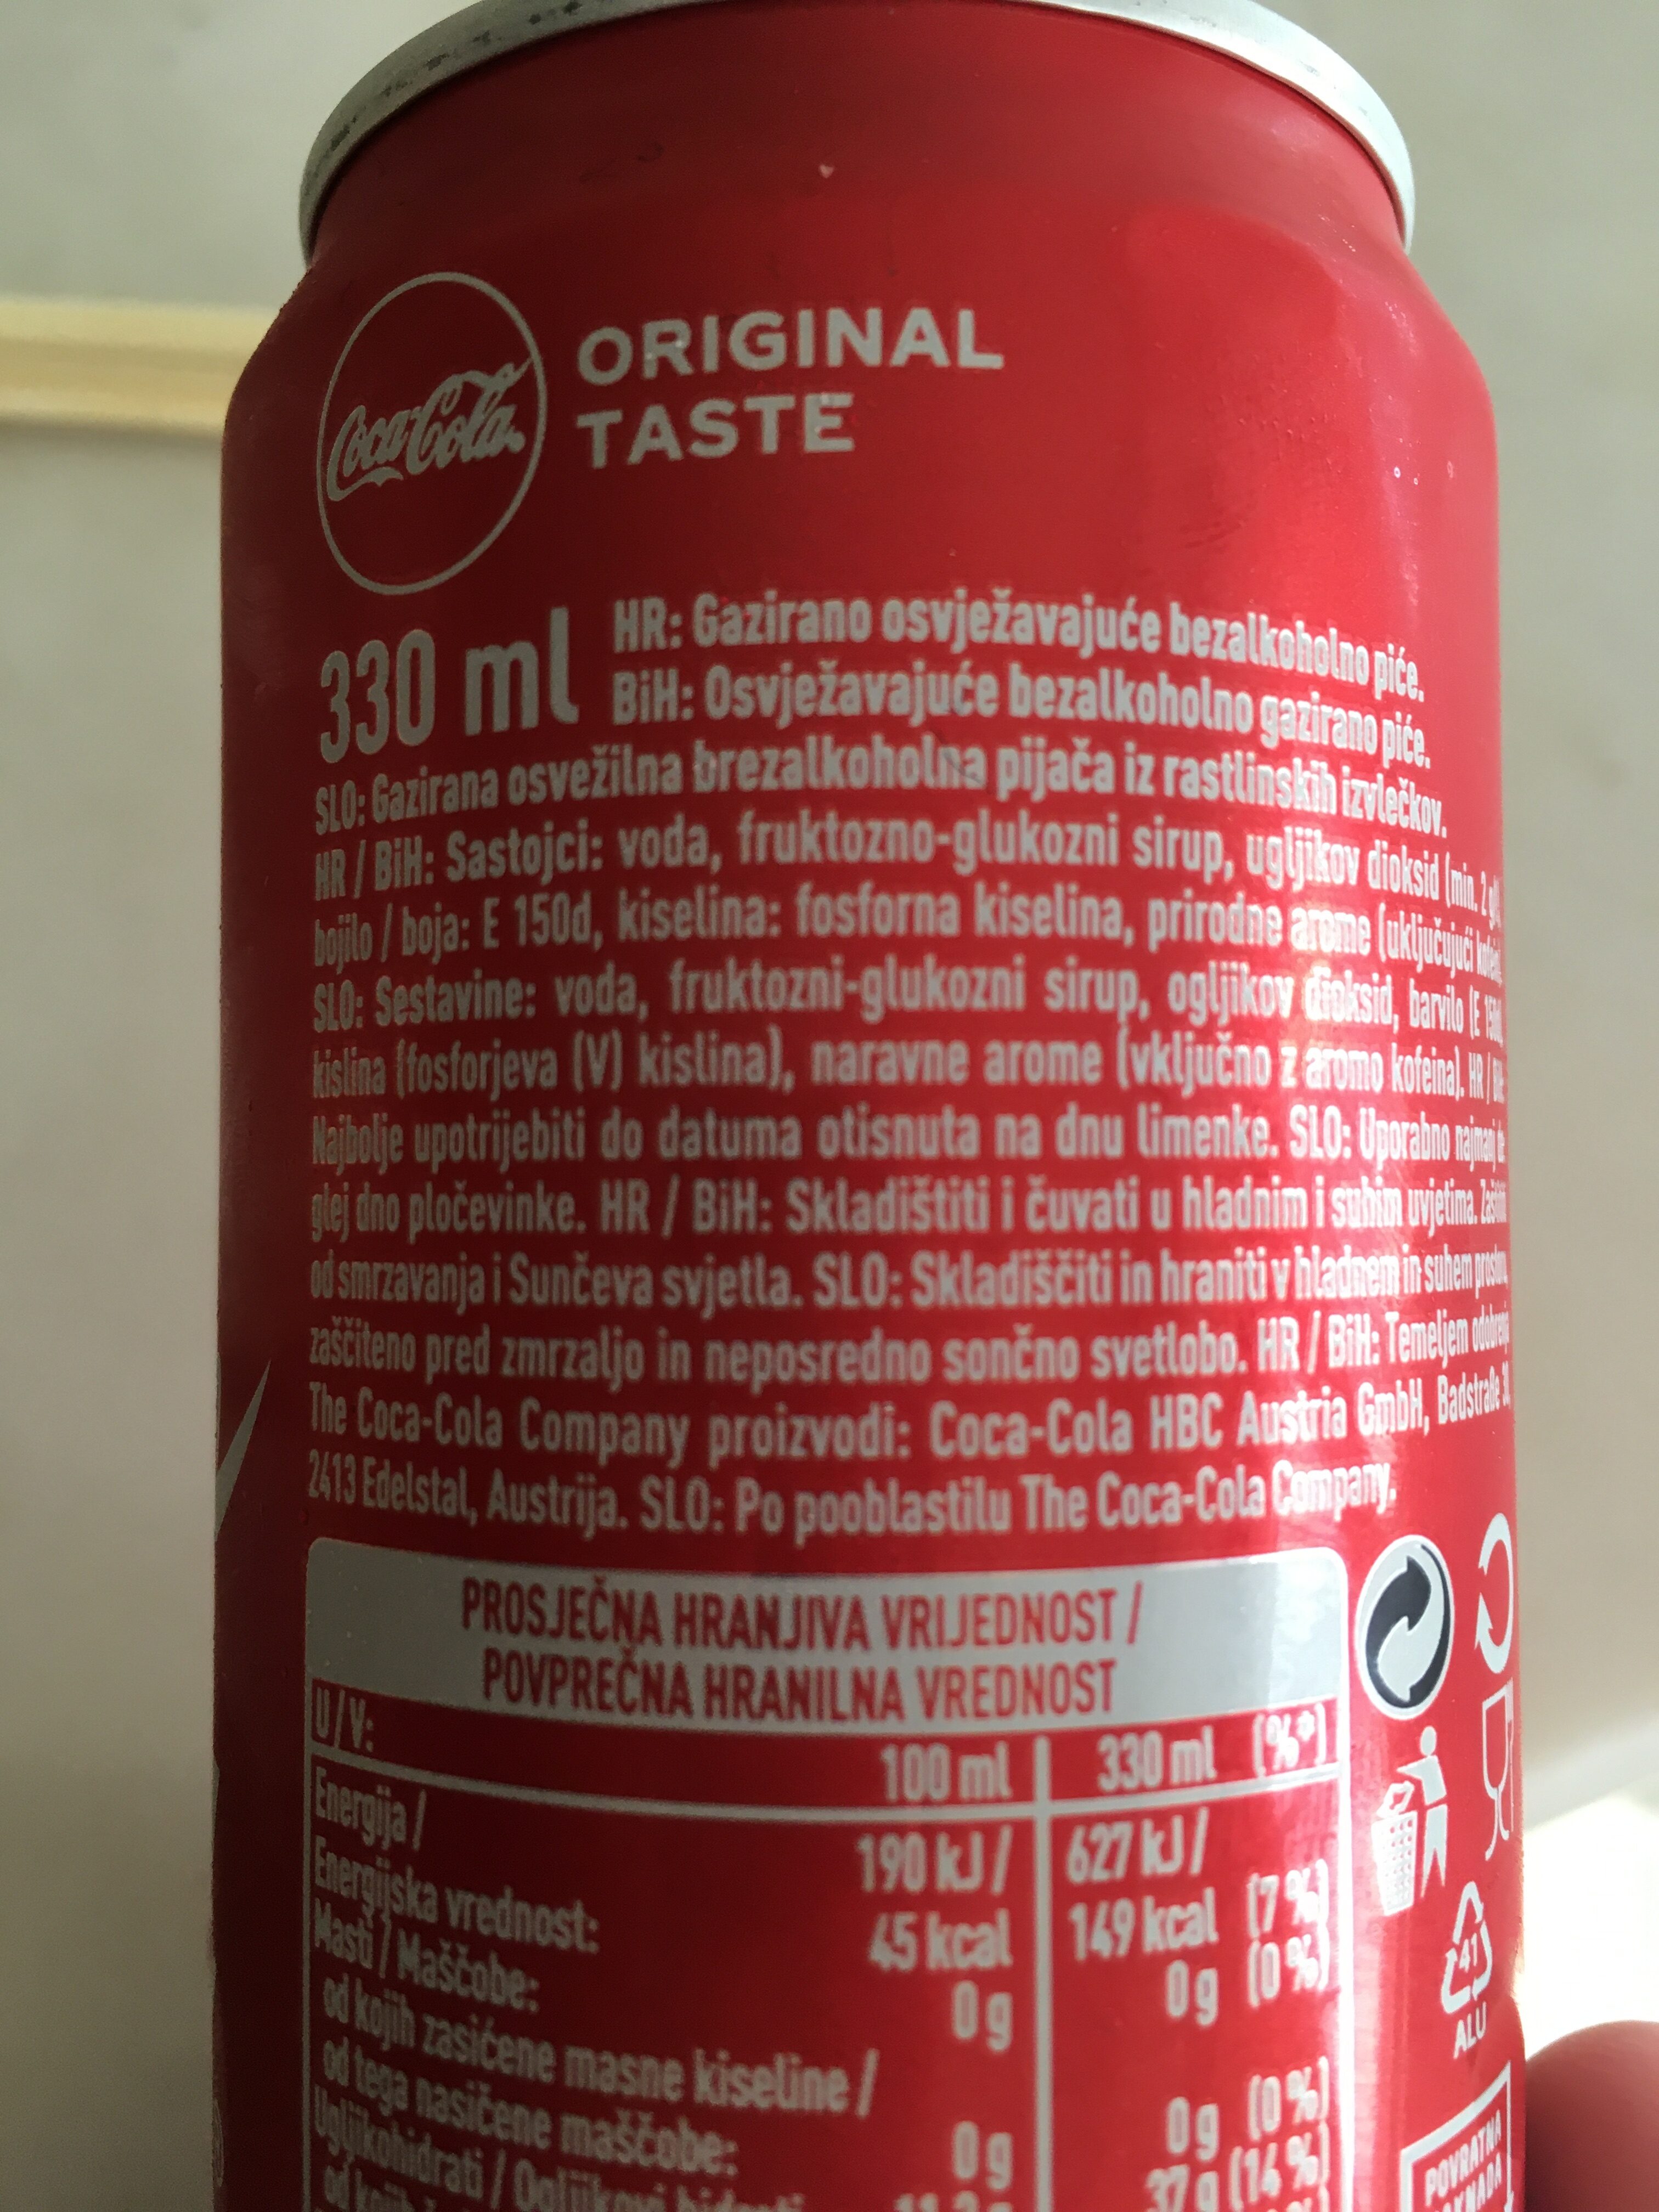 Coca-cola goût original - Ingredienti - en